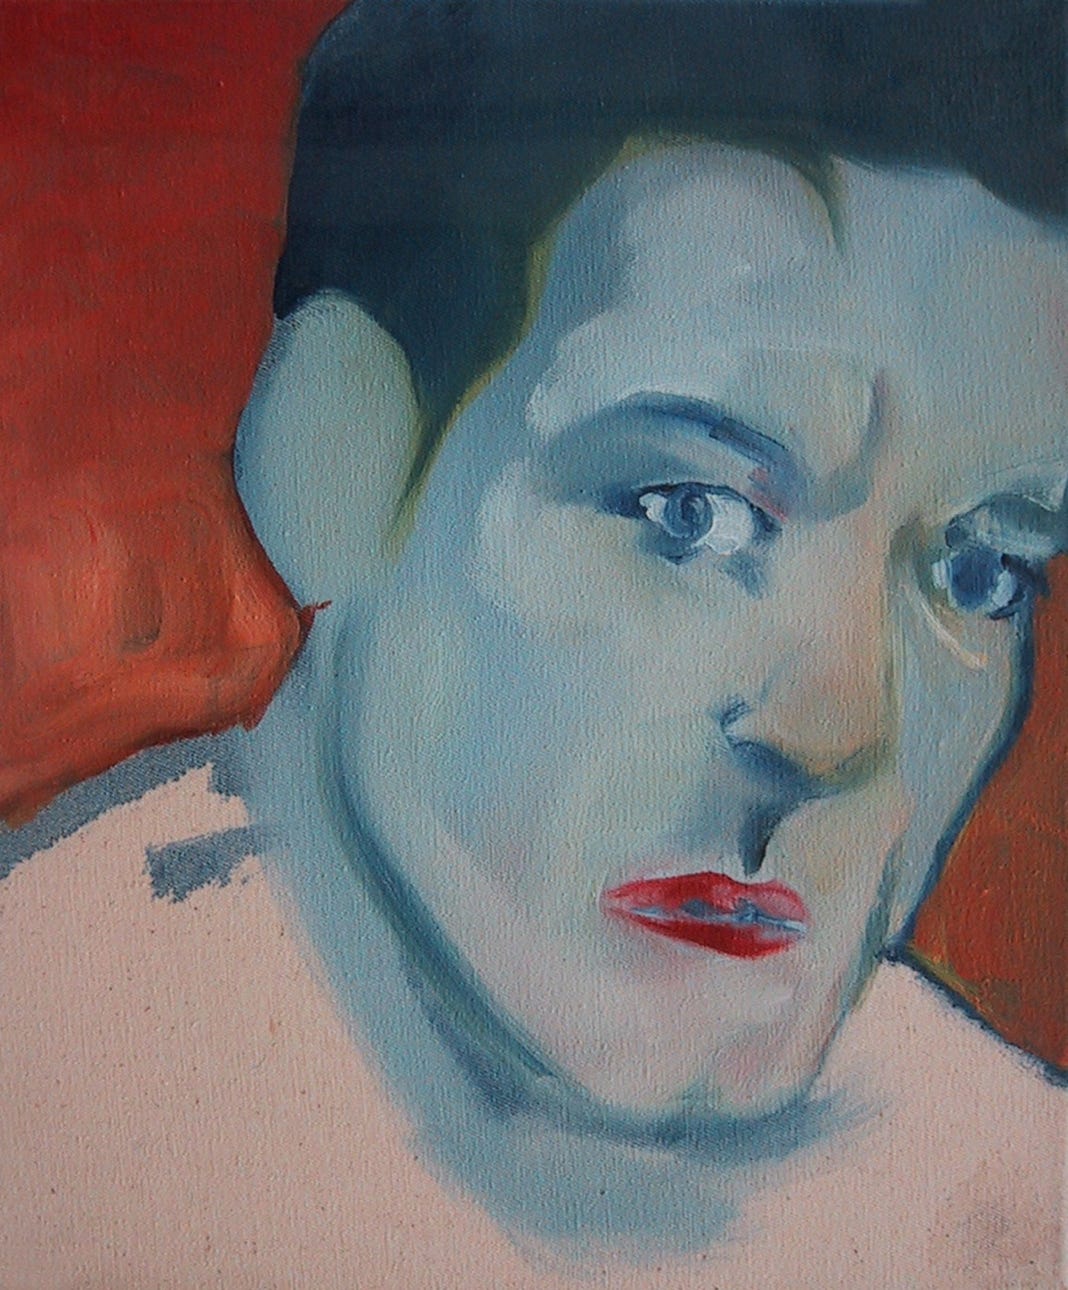 25x21 cm, oil on canvas, 1999